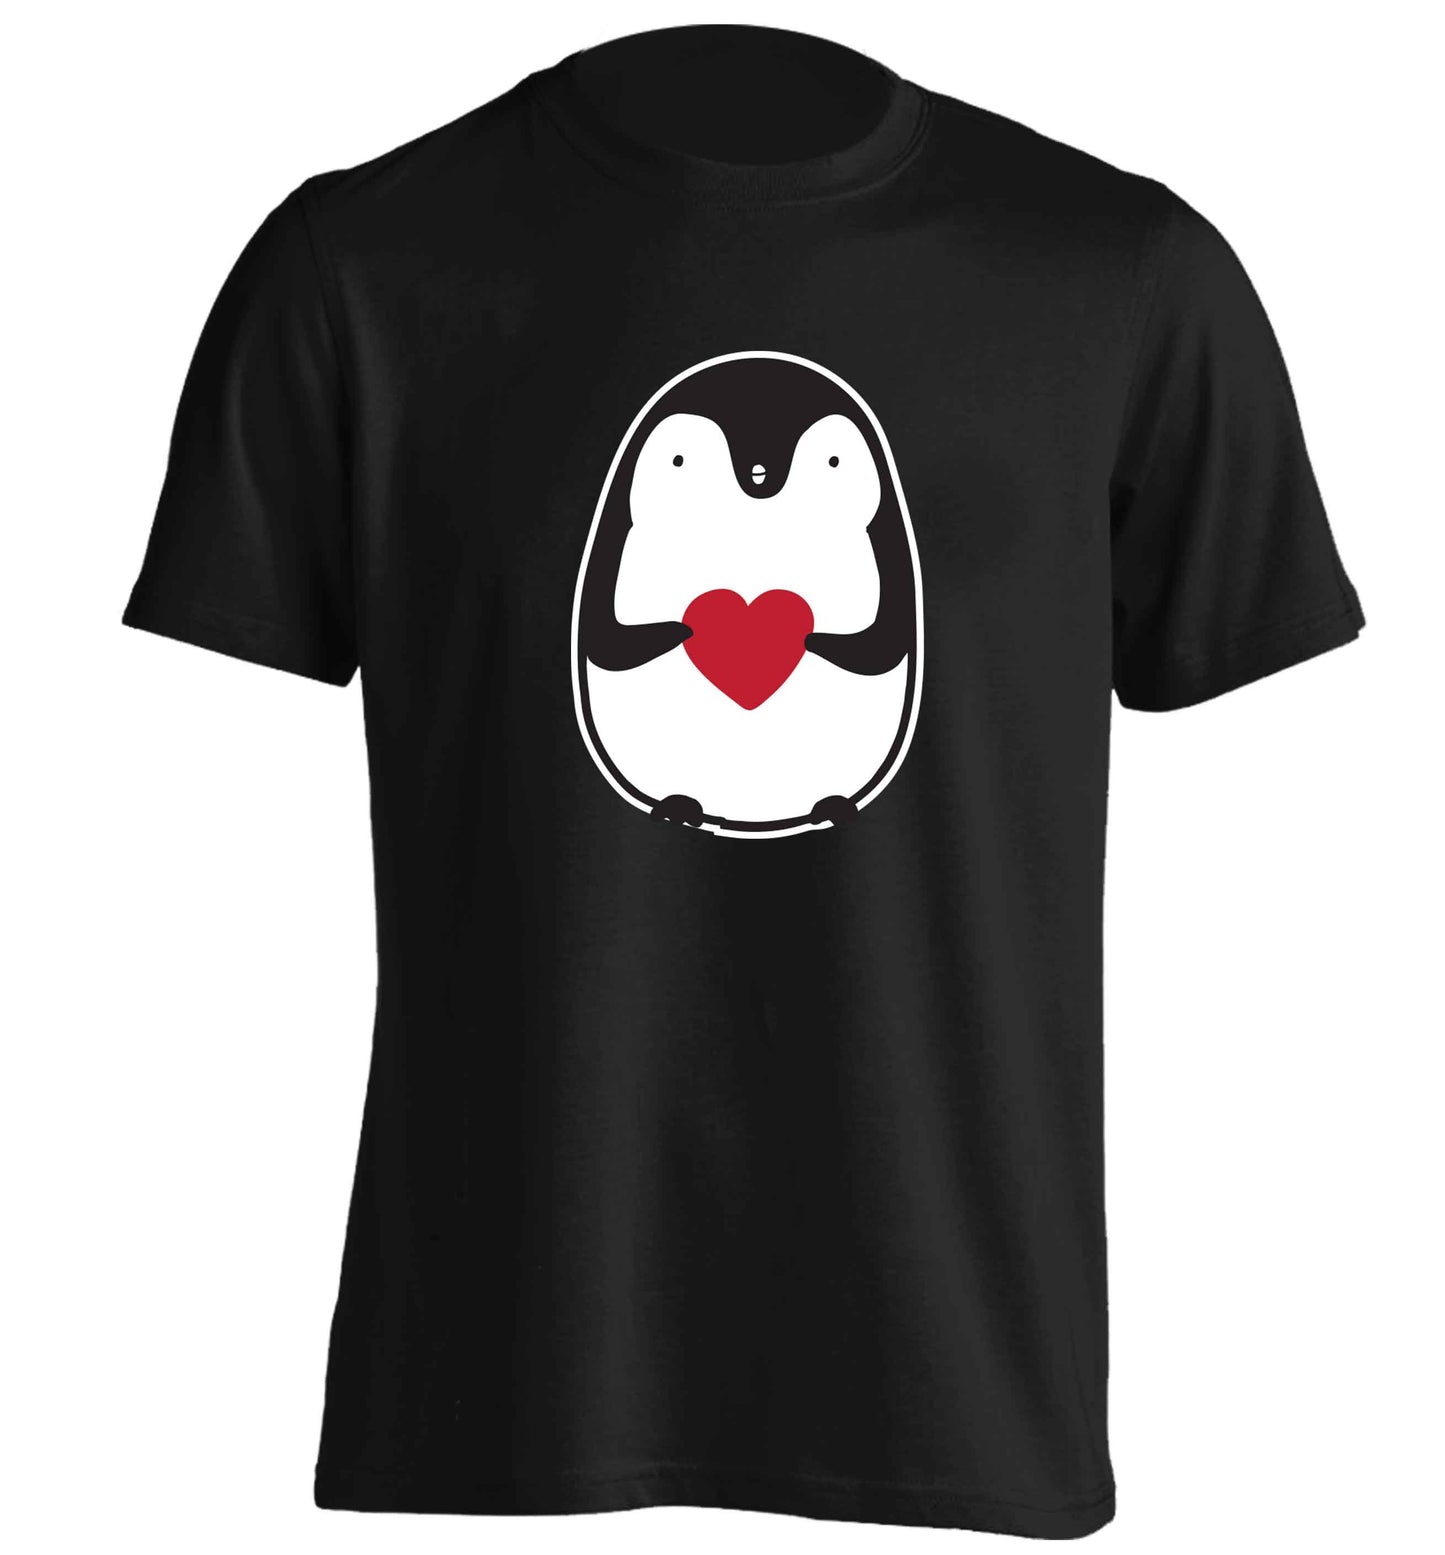 Cute penguin heart adults unisex black Tshirt 2XL